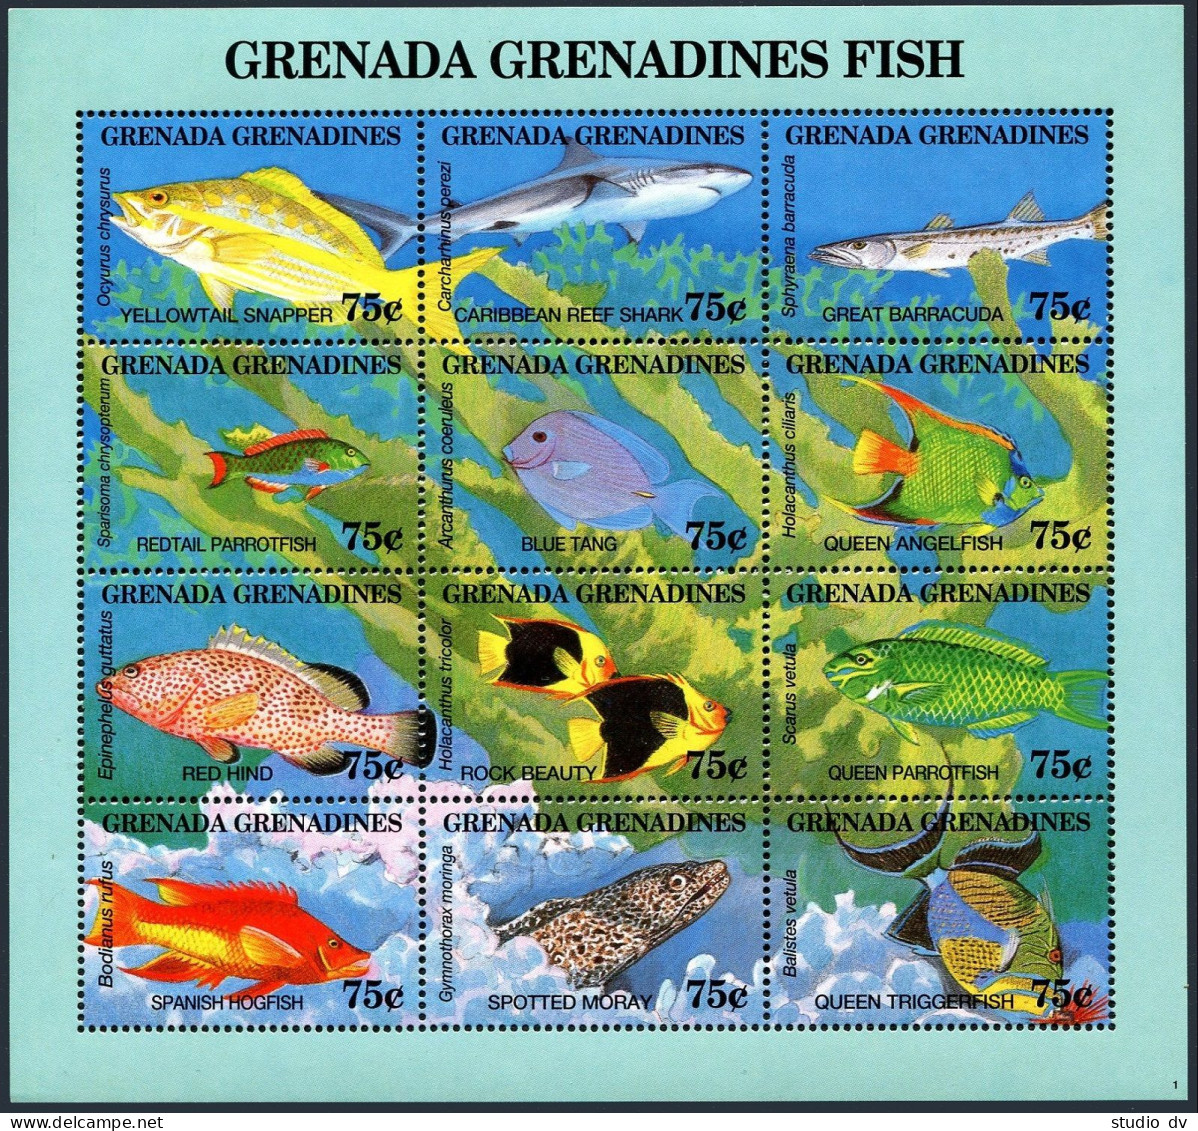 Grenada Gren 1690-1691 Al Sheets,MNH.Michel 1934-1957. Marine Life 1994.Fish. - Grenada (1974-...)